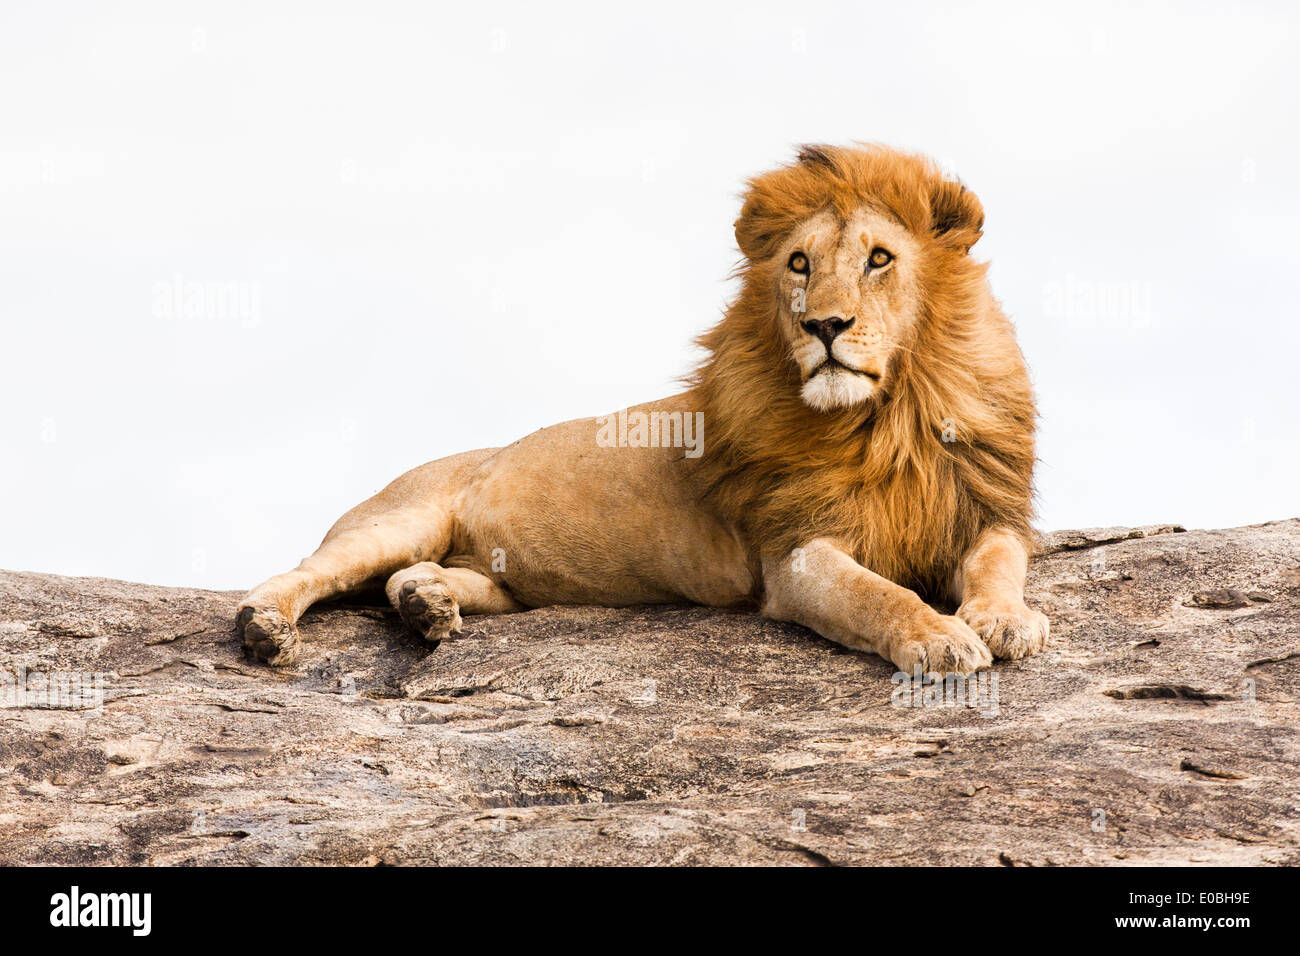 León (Panthera leo) sobre una roca boulder fotografiado en Tanzania Foto de stock